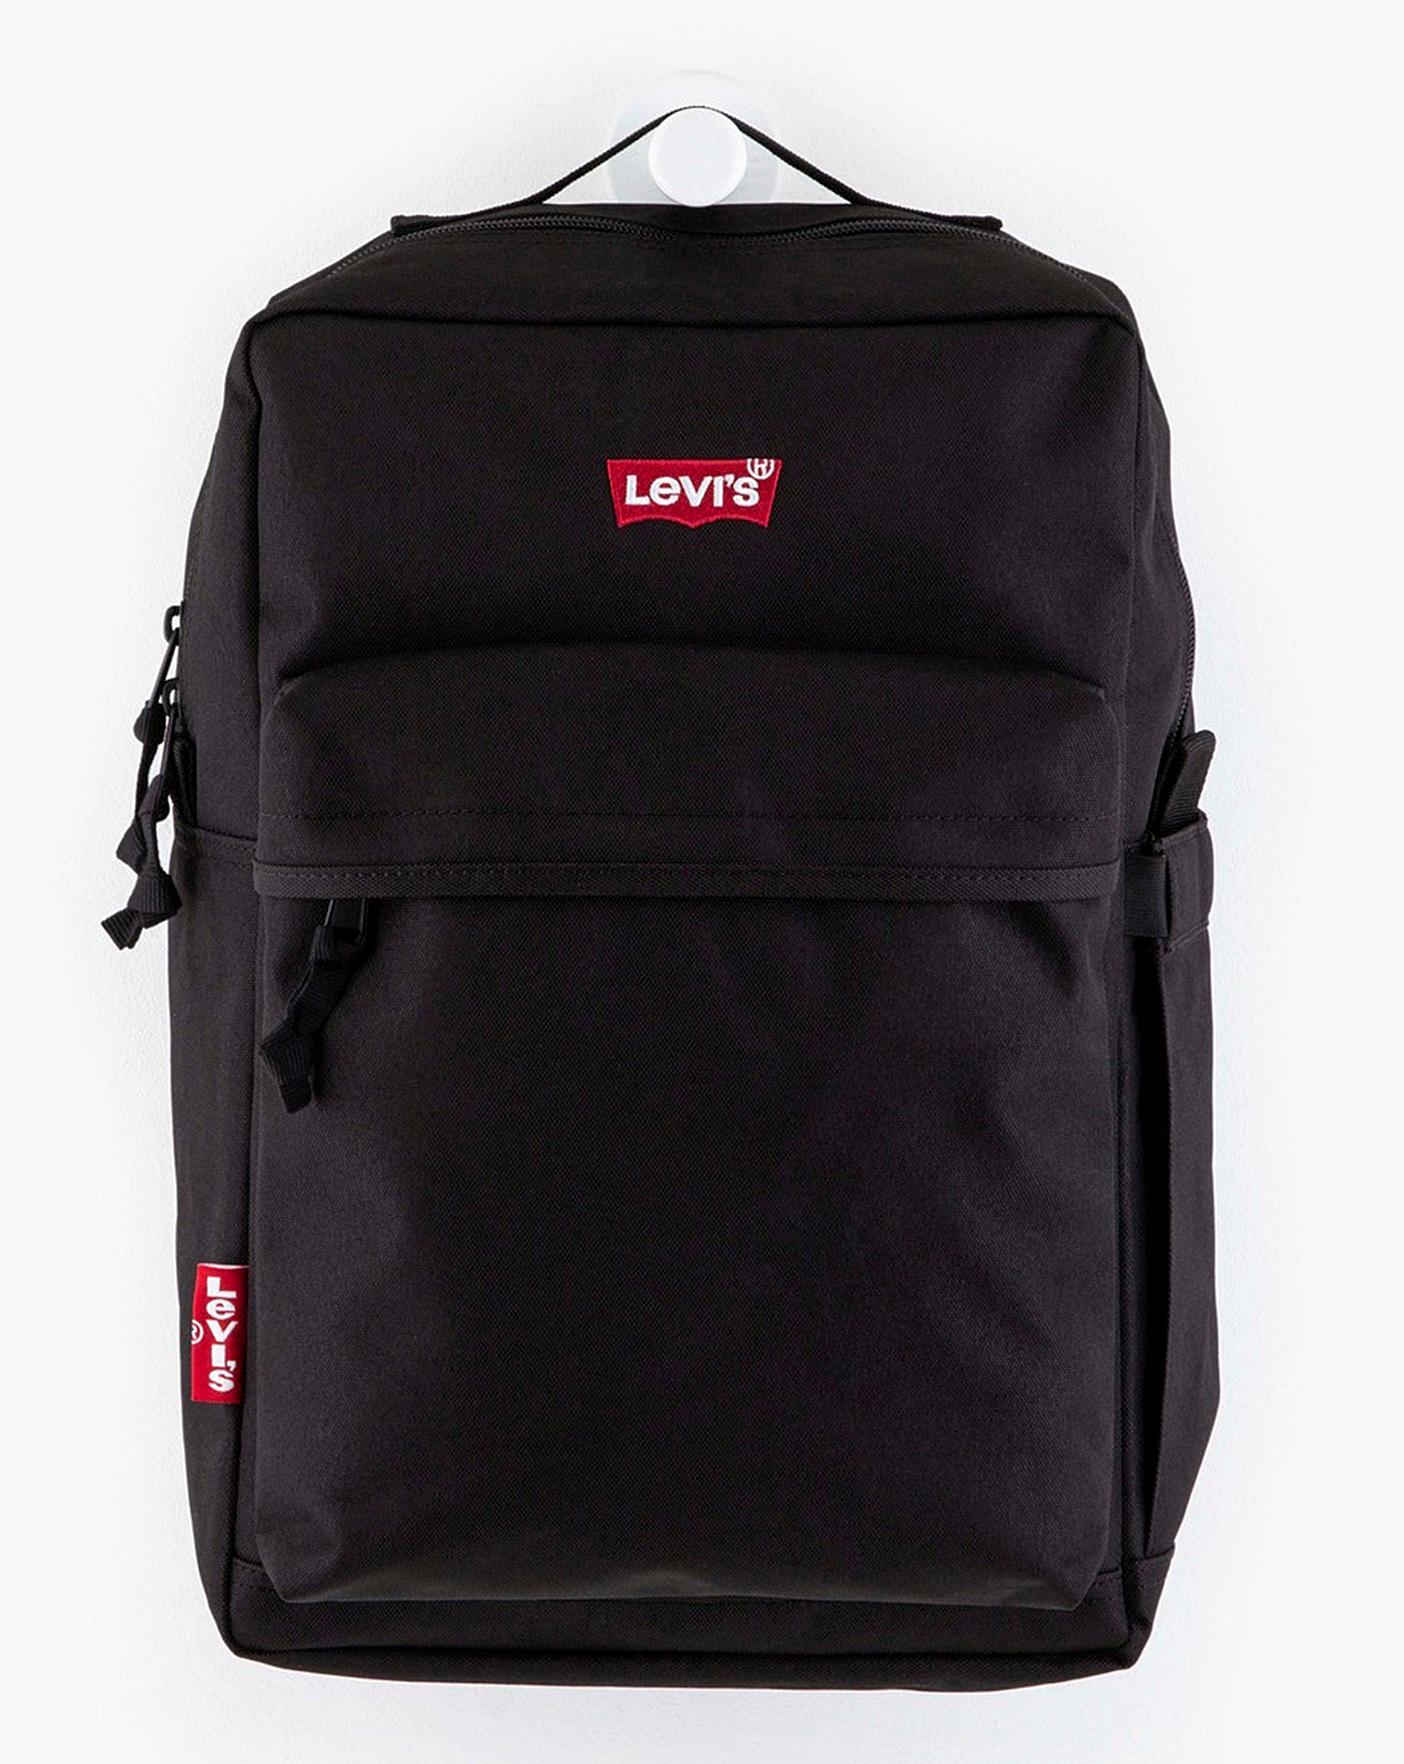 levi's bags